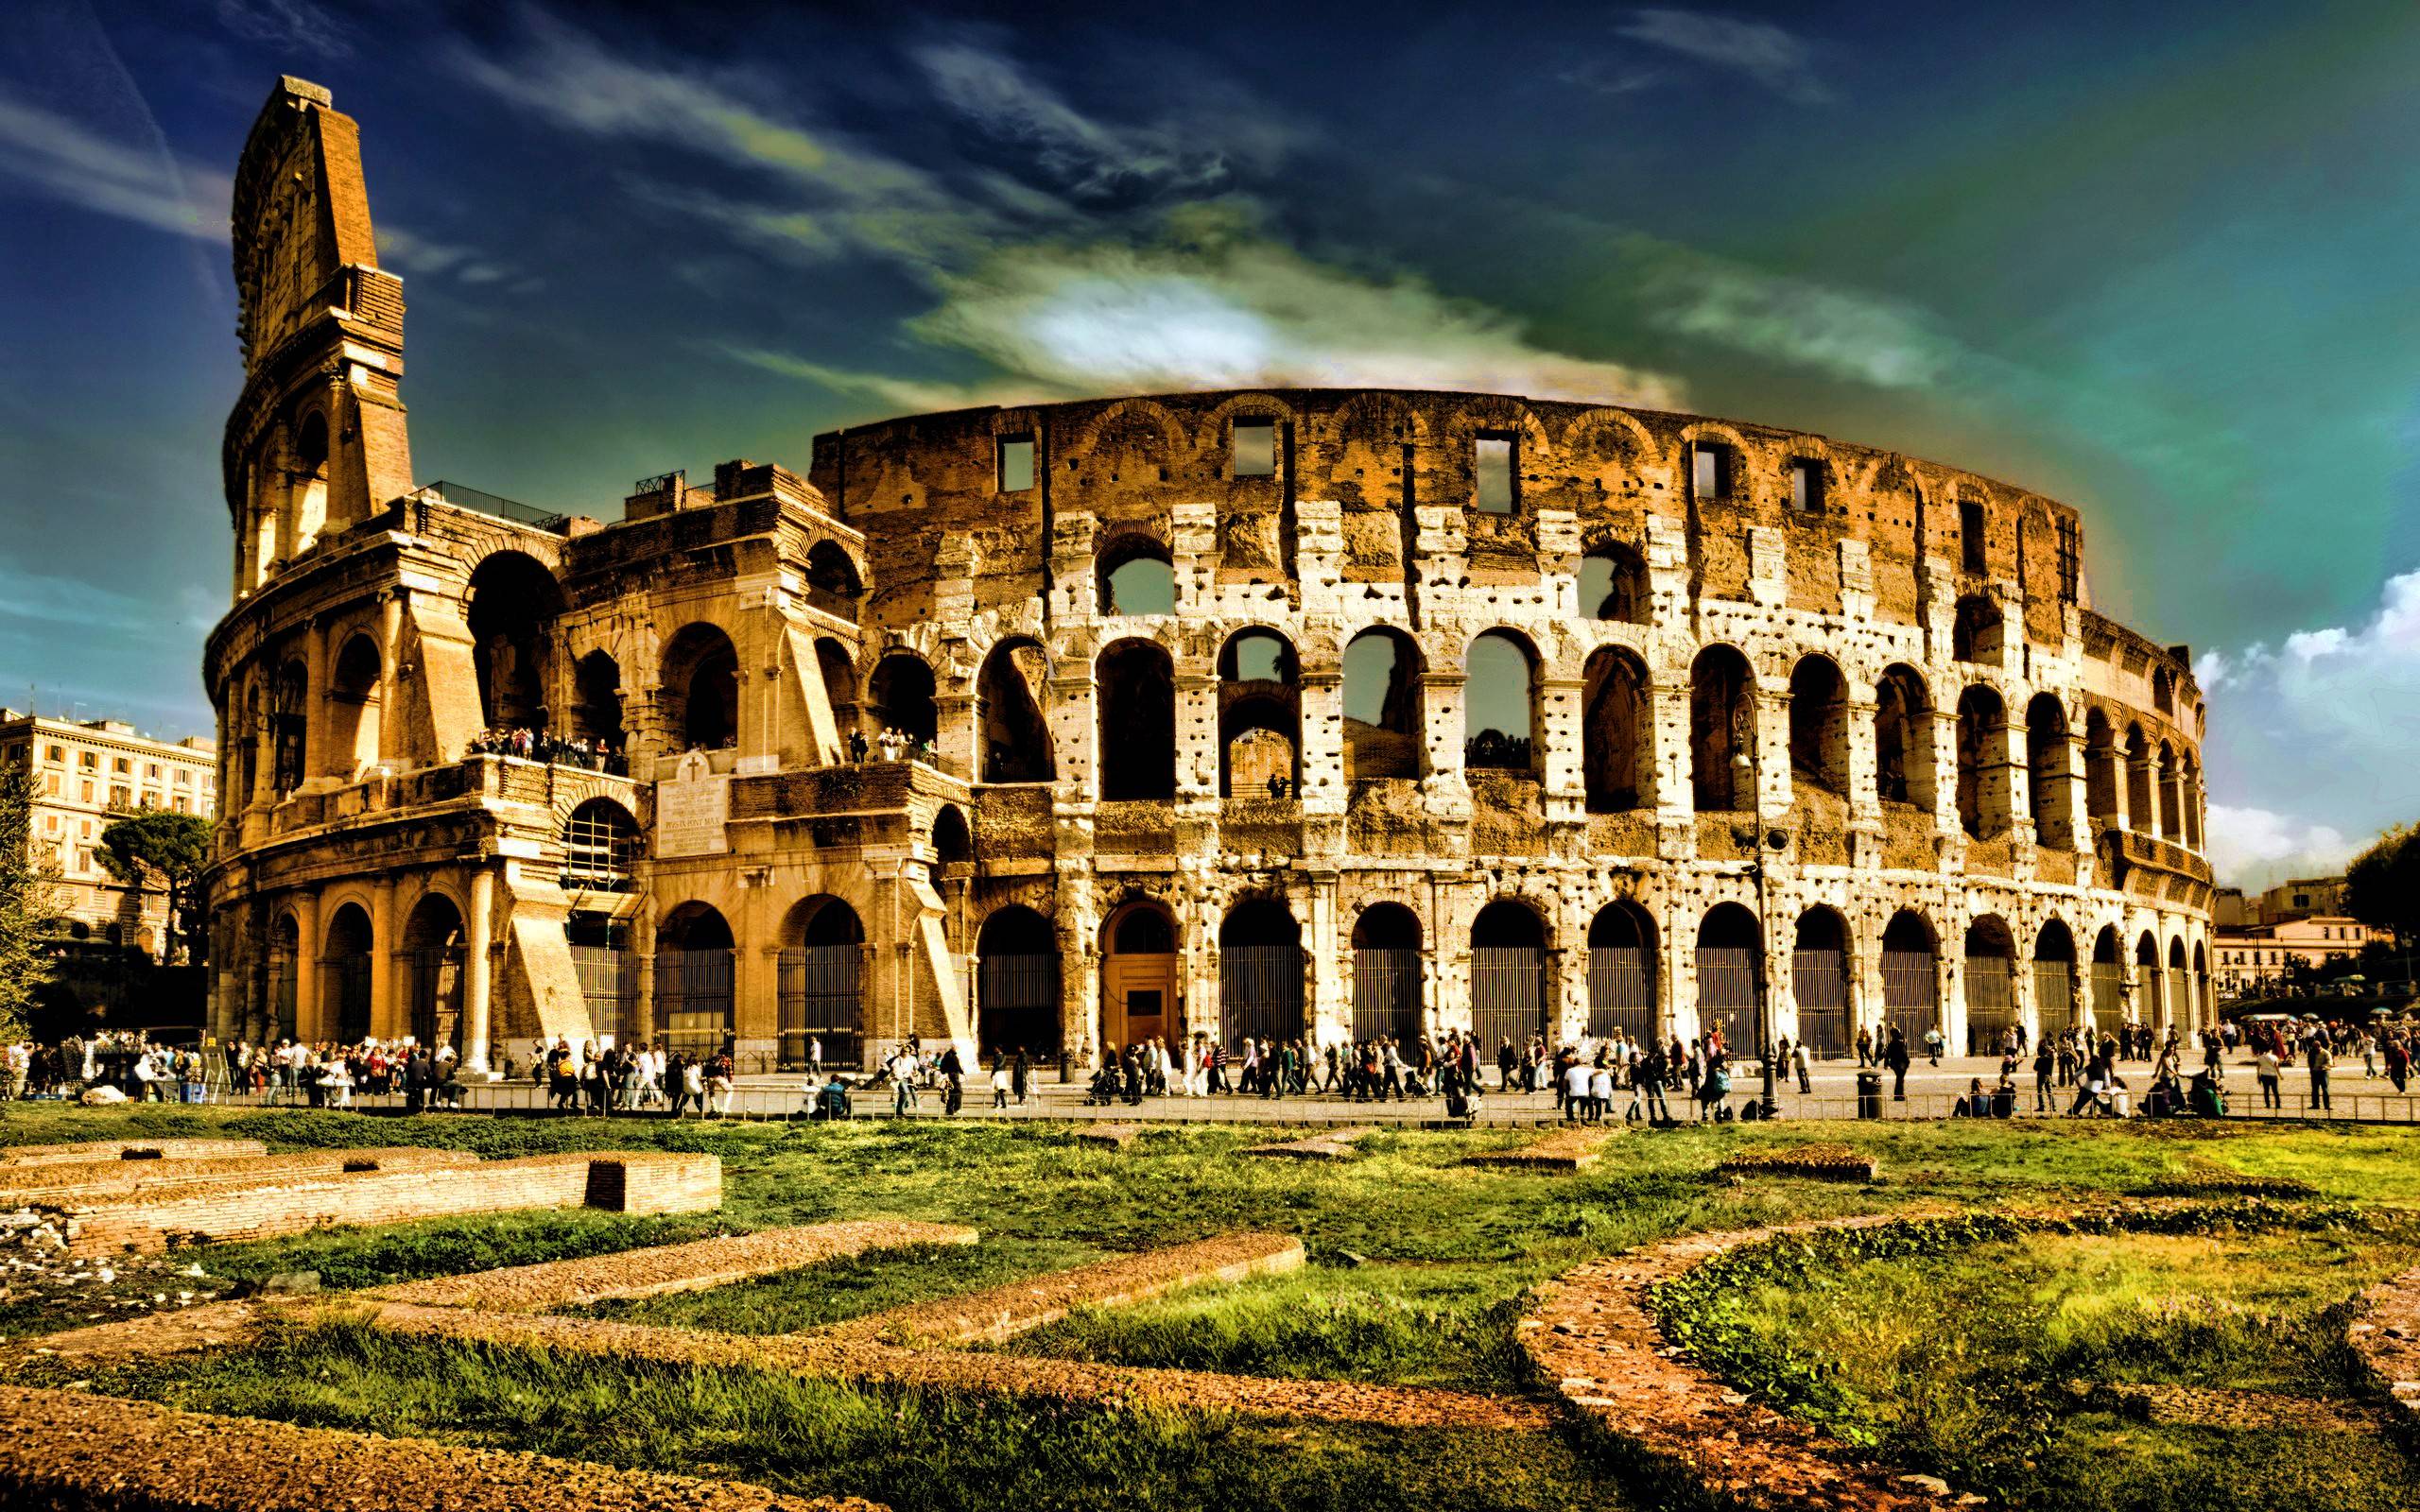 Download Colosseum Wallpaper 6634 2560x1600 px High Resolution